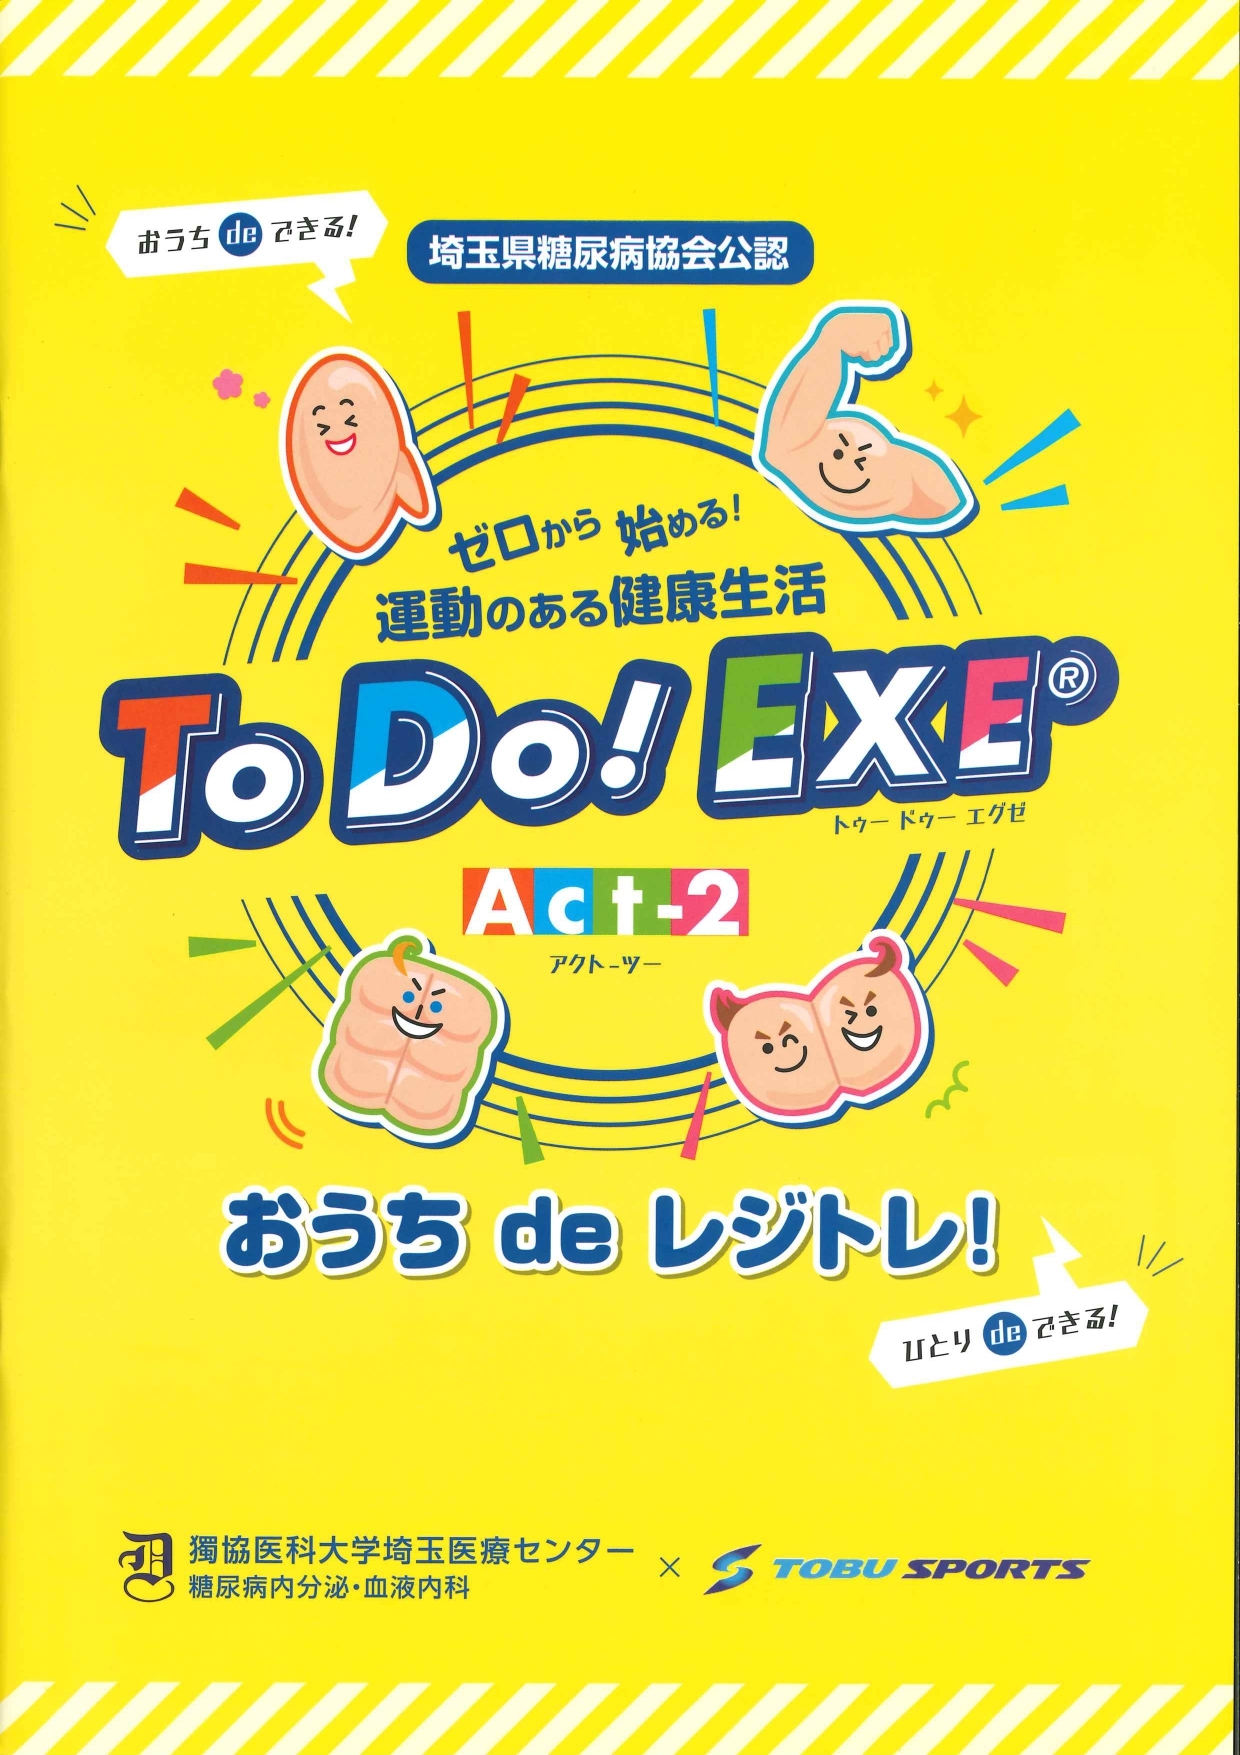 ToDo!EXE(表紙)_page-0001.jpg